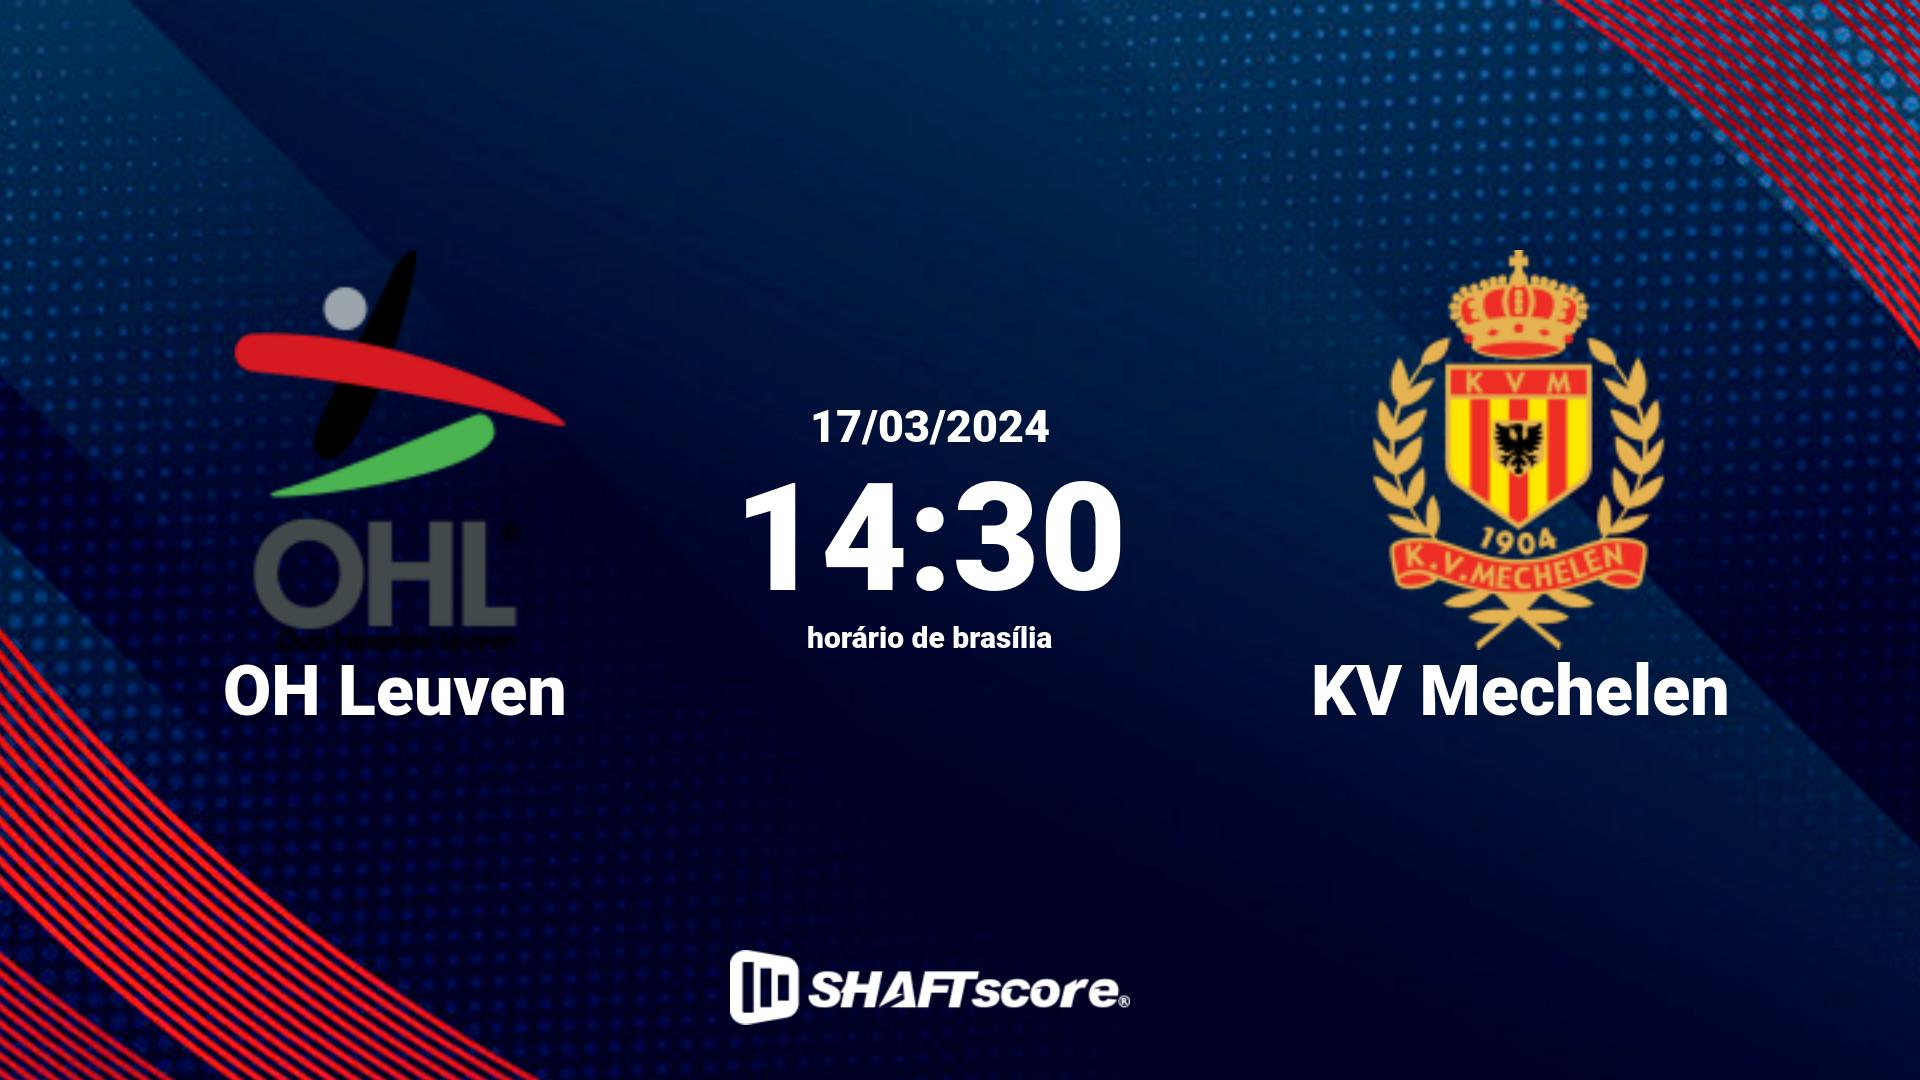 Estatísticas do jogo OH Leuven vs KV Mechelen 17.03 14:30